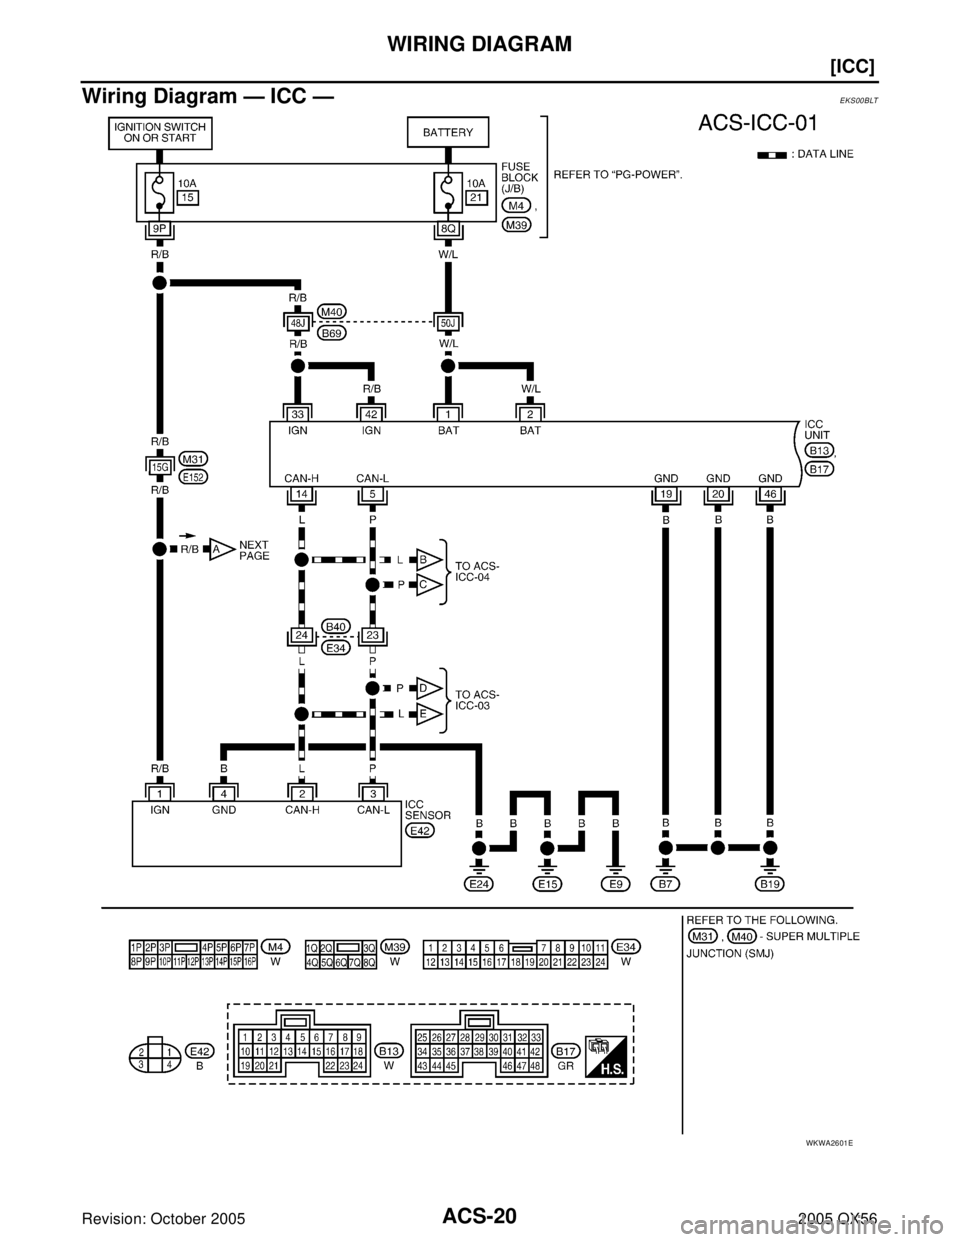 INFINITI QX4 2005  Factory Service Manual ACS-20
[ICC]
WIRING DIAGRAM
Revision: October 20052005 QX56
Wiring Diagram — ICC —EKS00BLT
WKWA2601E 